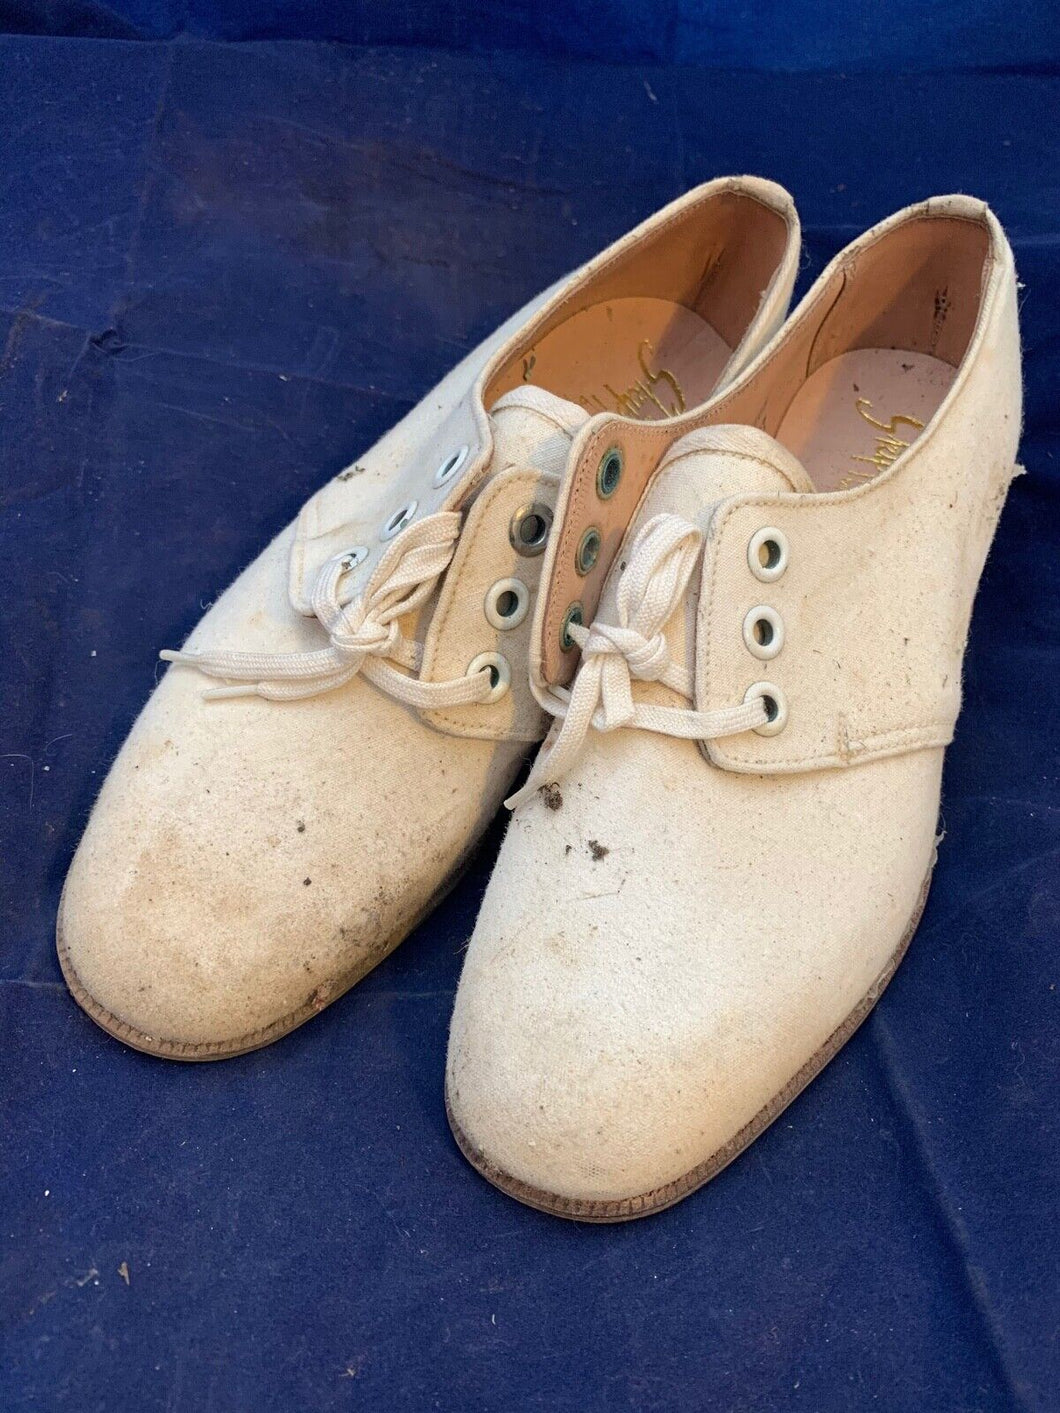 Original WW2 British Army Women's White Summer Shoes - ATS WAAF - Size 215M #2